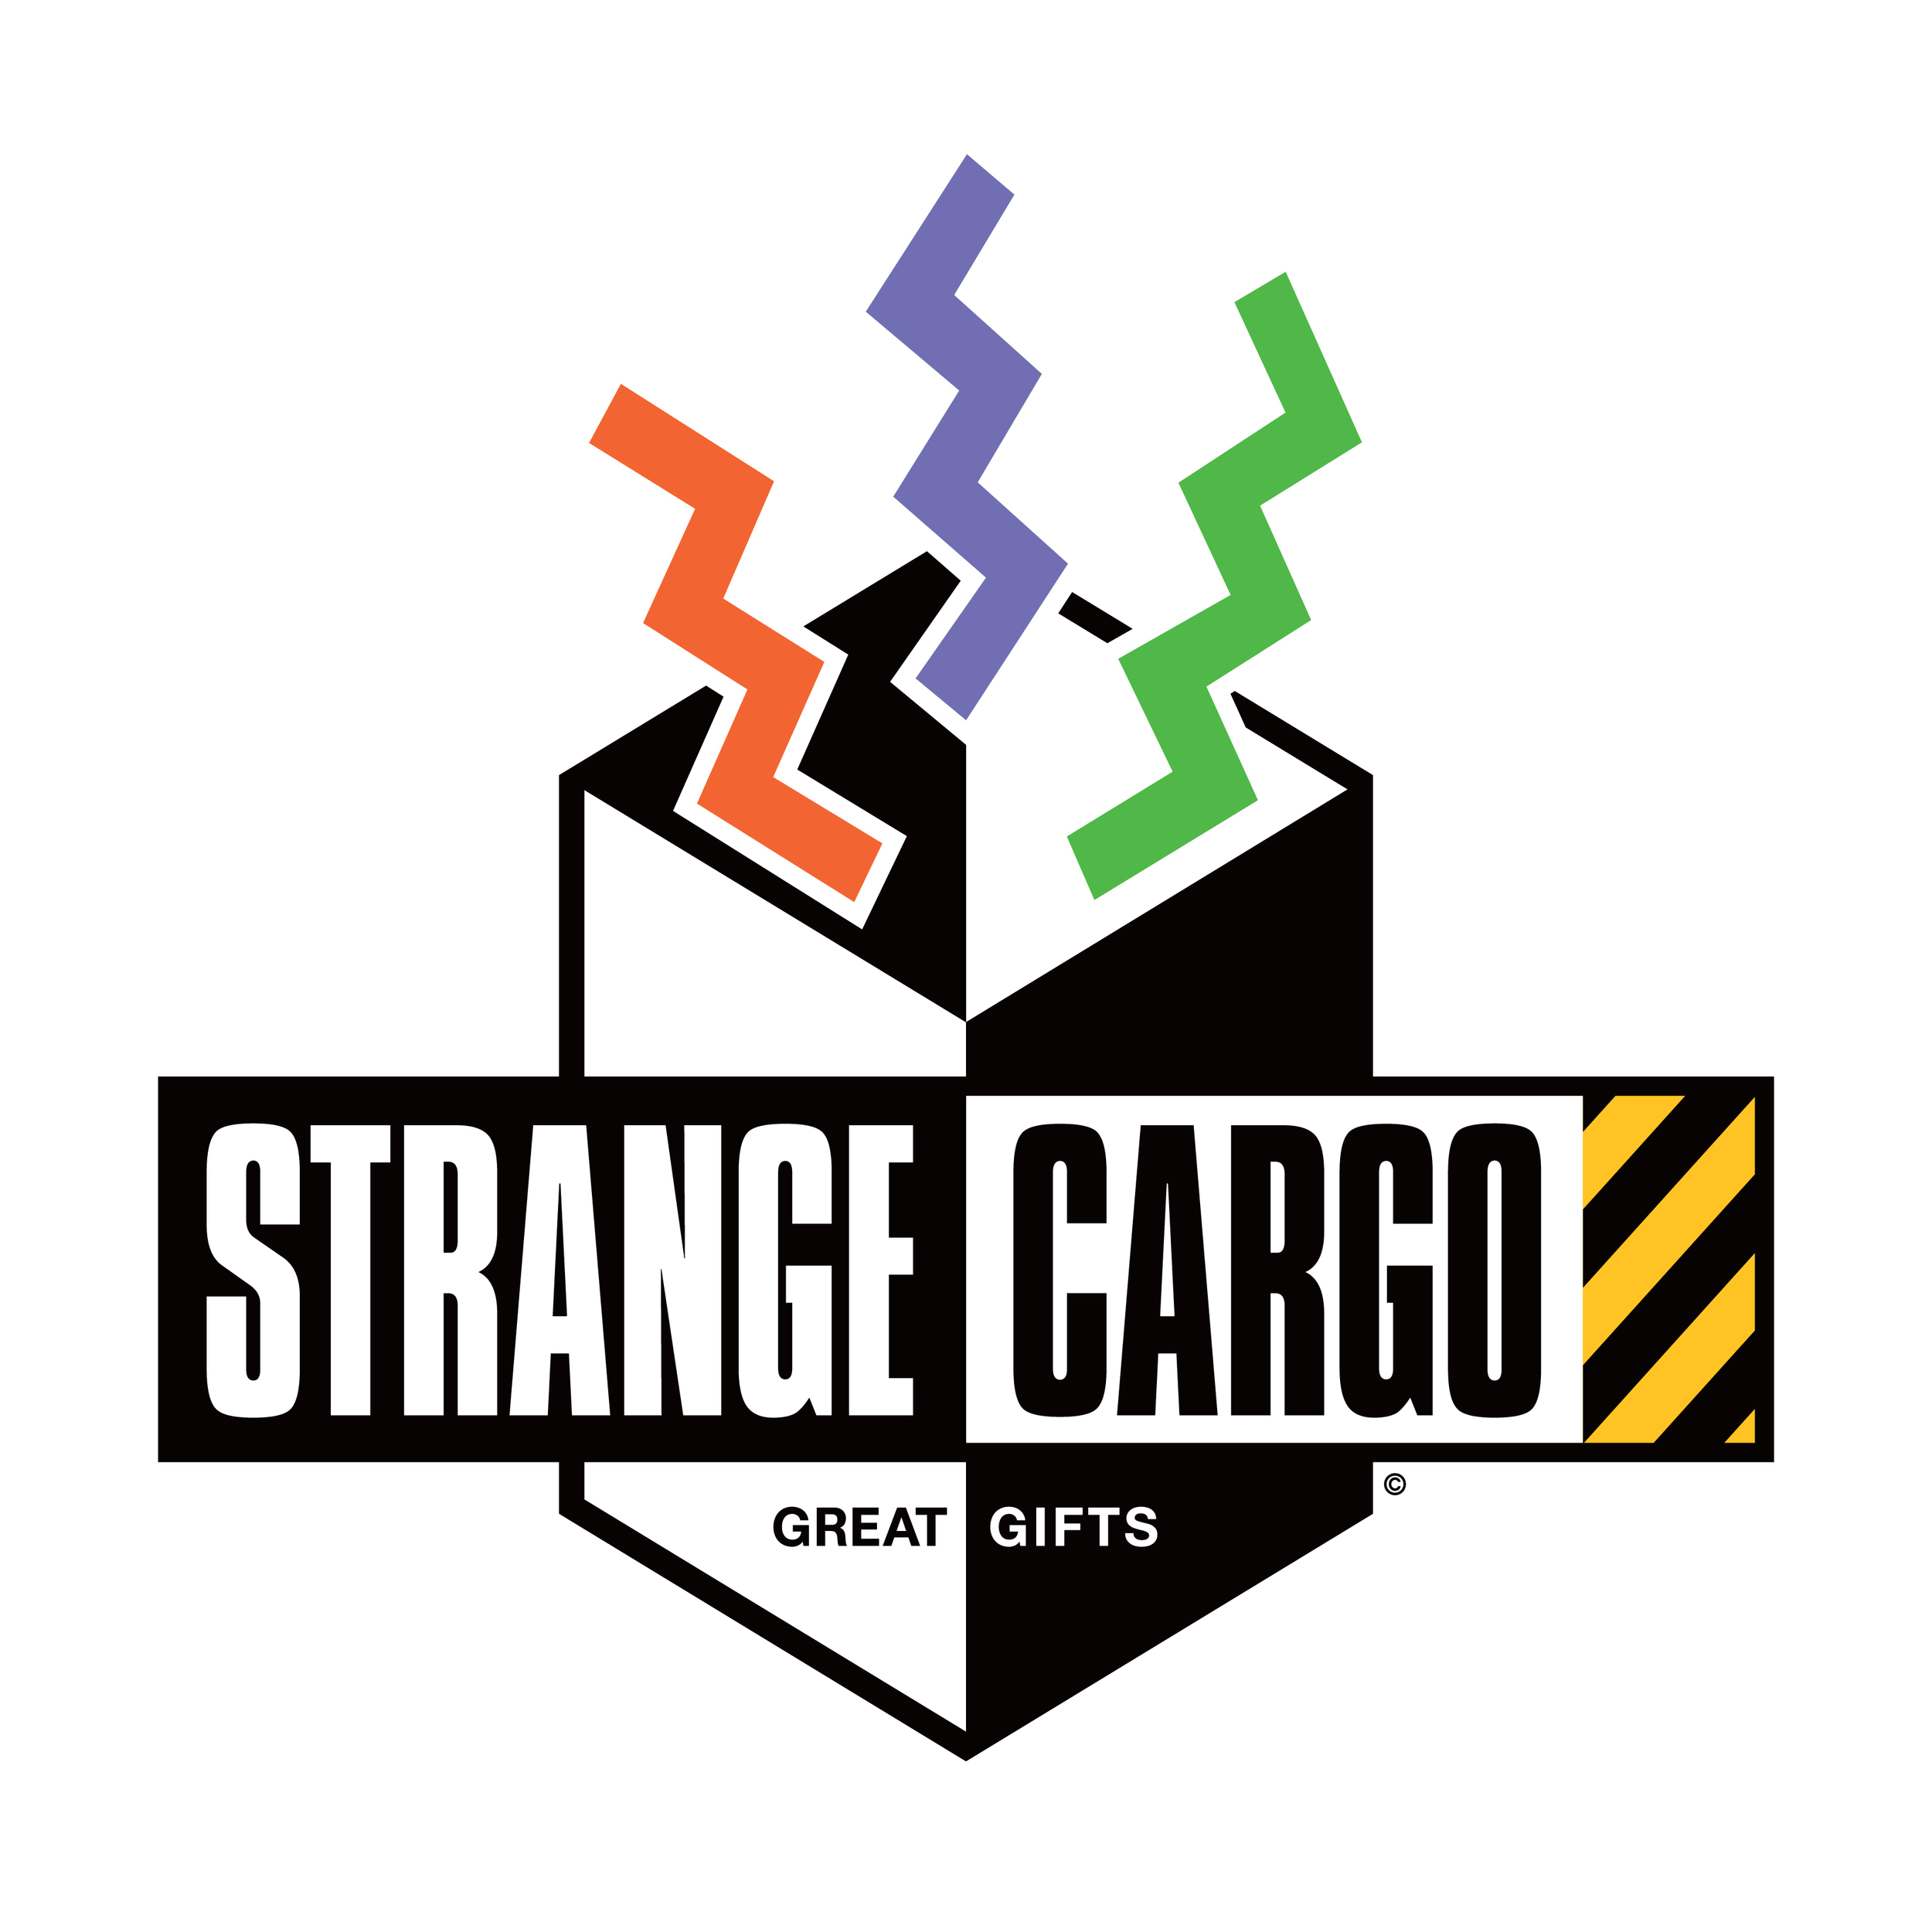  Strange Cargo logo  Branding creative and design by Chuck Mitchell 